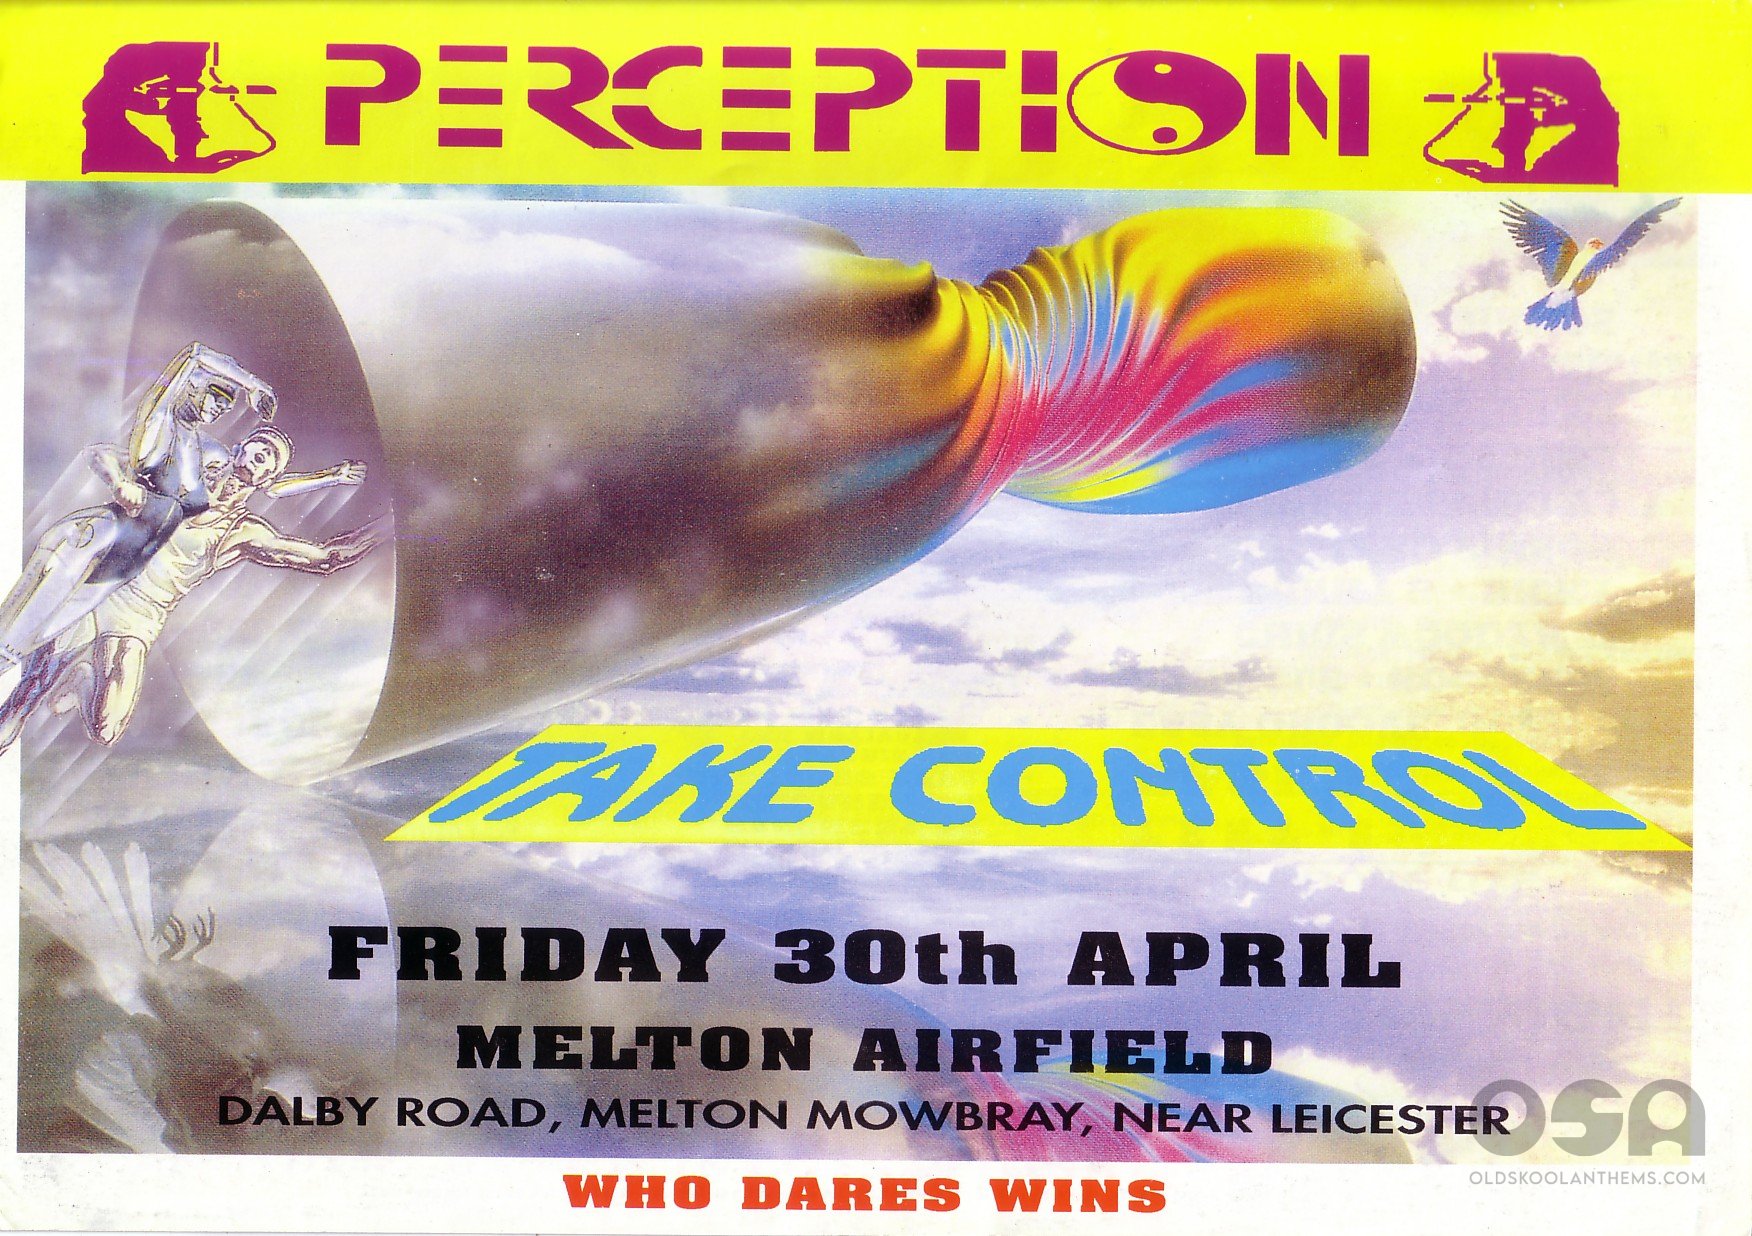 1_Perception_Take_Control___Melton_Airfield_nr_Leicester_Fri_30th_April.jpg